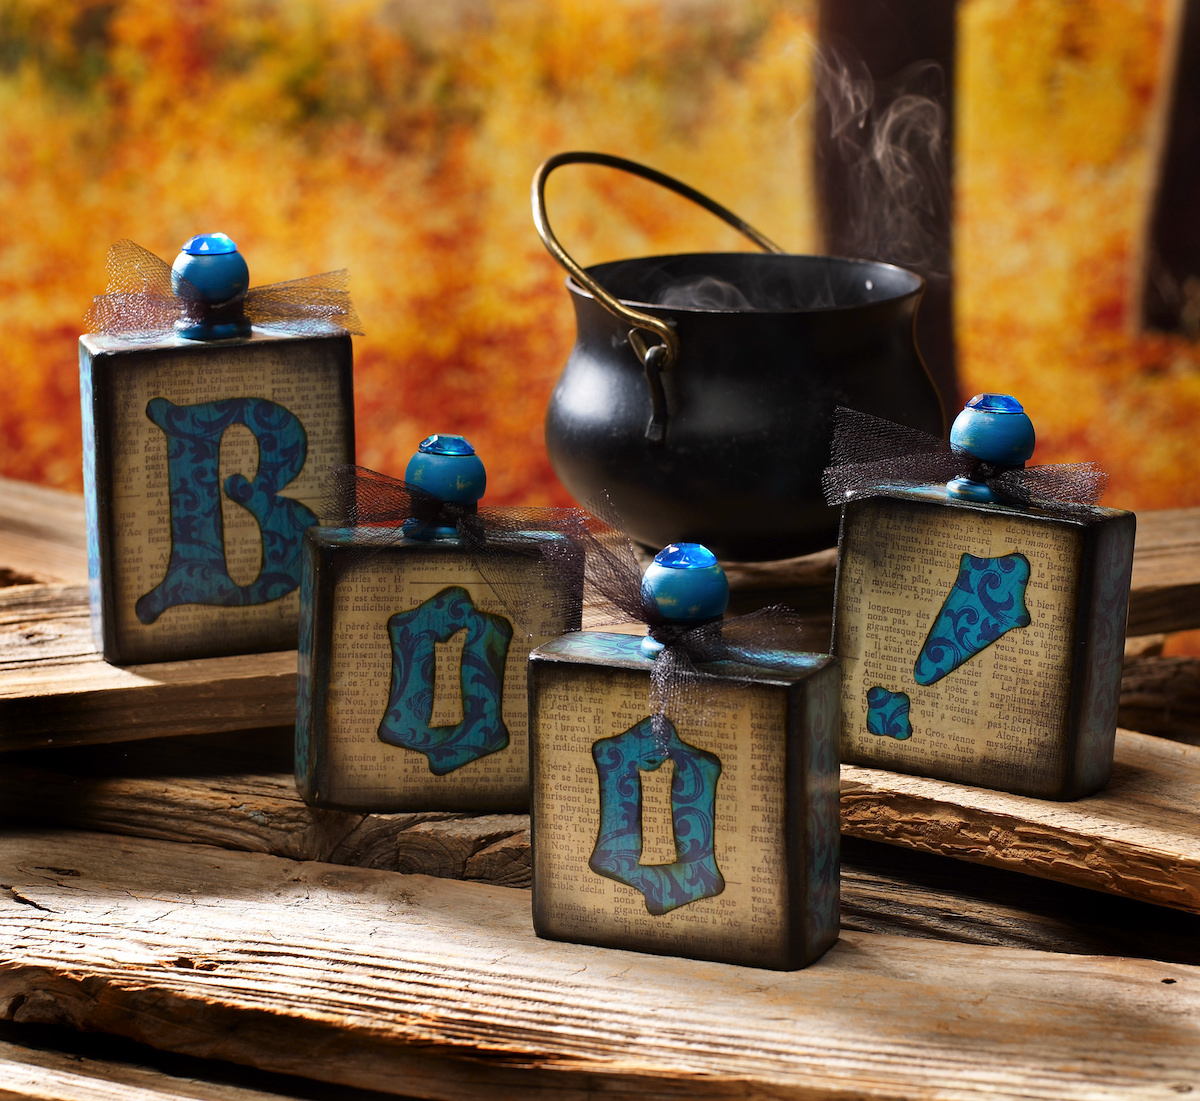 BOO Potion wood blocks for Halloween decor made with Mod Podge